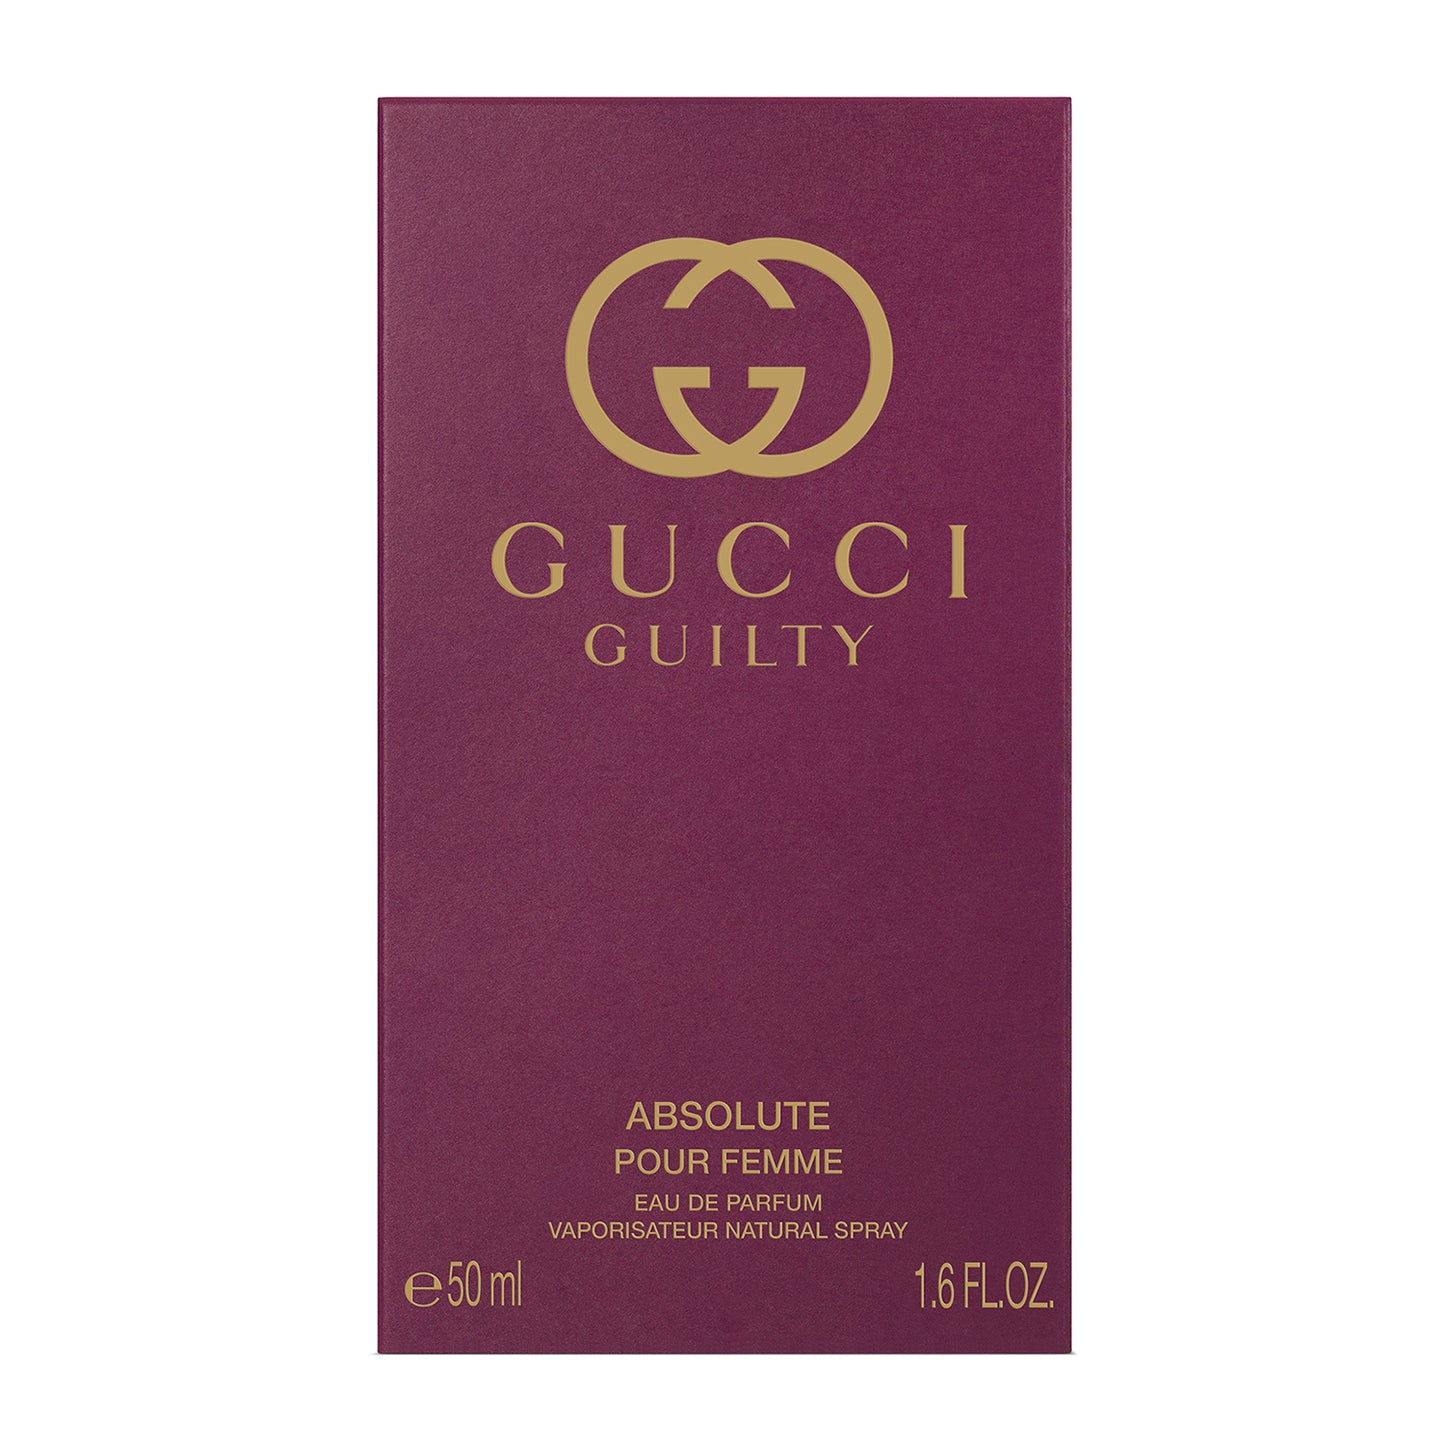 Gucci Guilty Absolute pour Femme